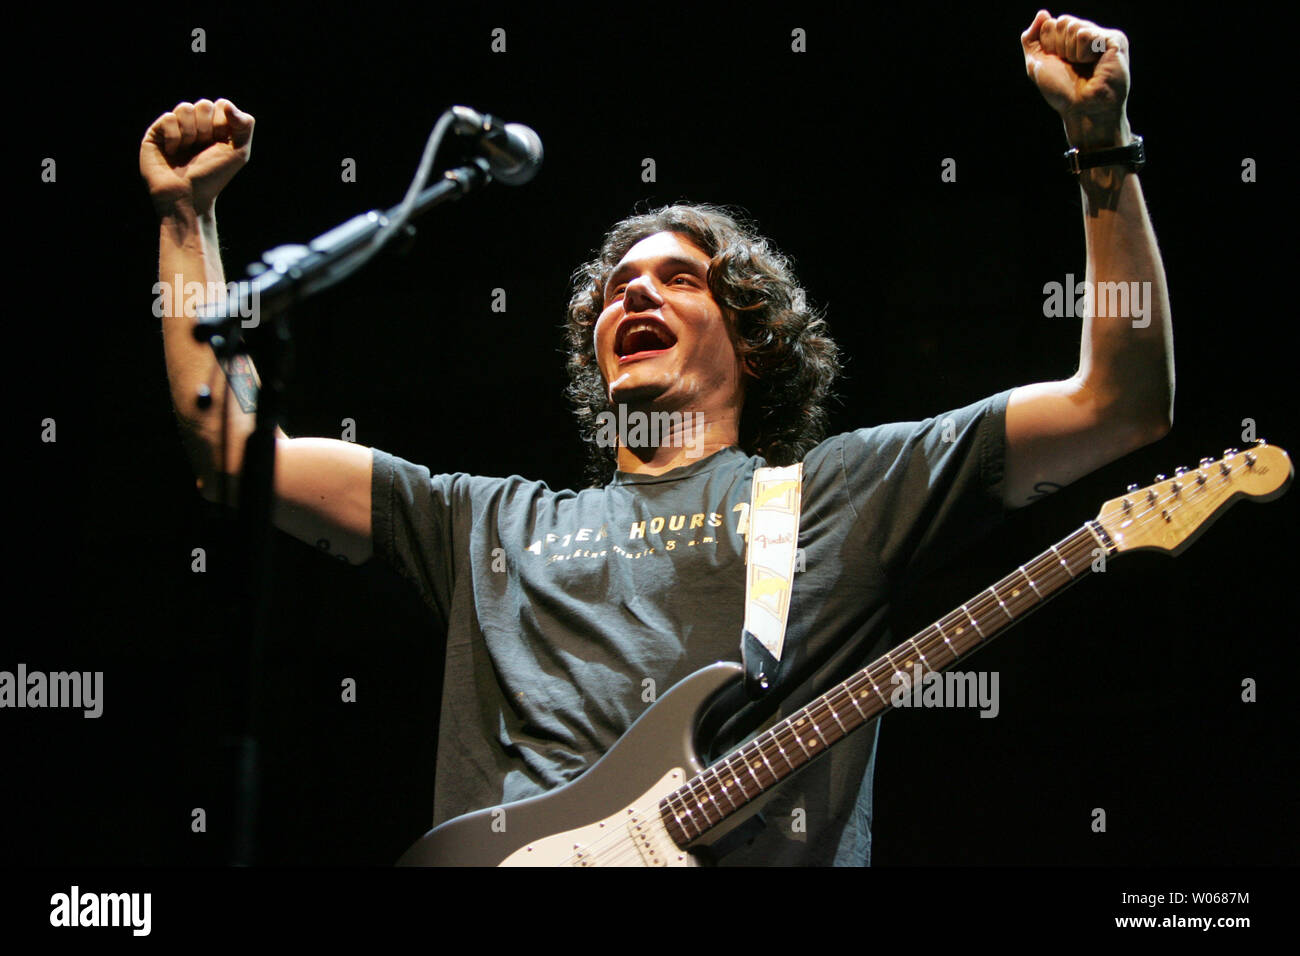 Chanteur John Mayer revs up les foules à l'UMB Bank Pavilion durant son concert à Maryland Heights, Mo, le 10 septembre 2006. (Photo d'UPI/Bill Greenblatt) Banque D'Images